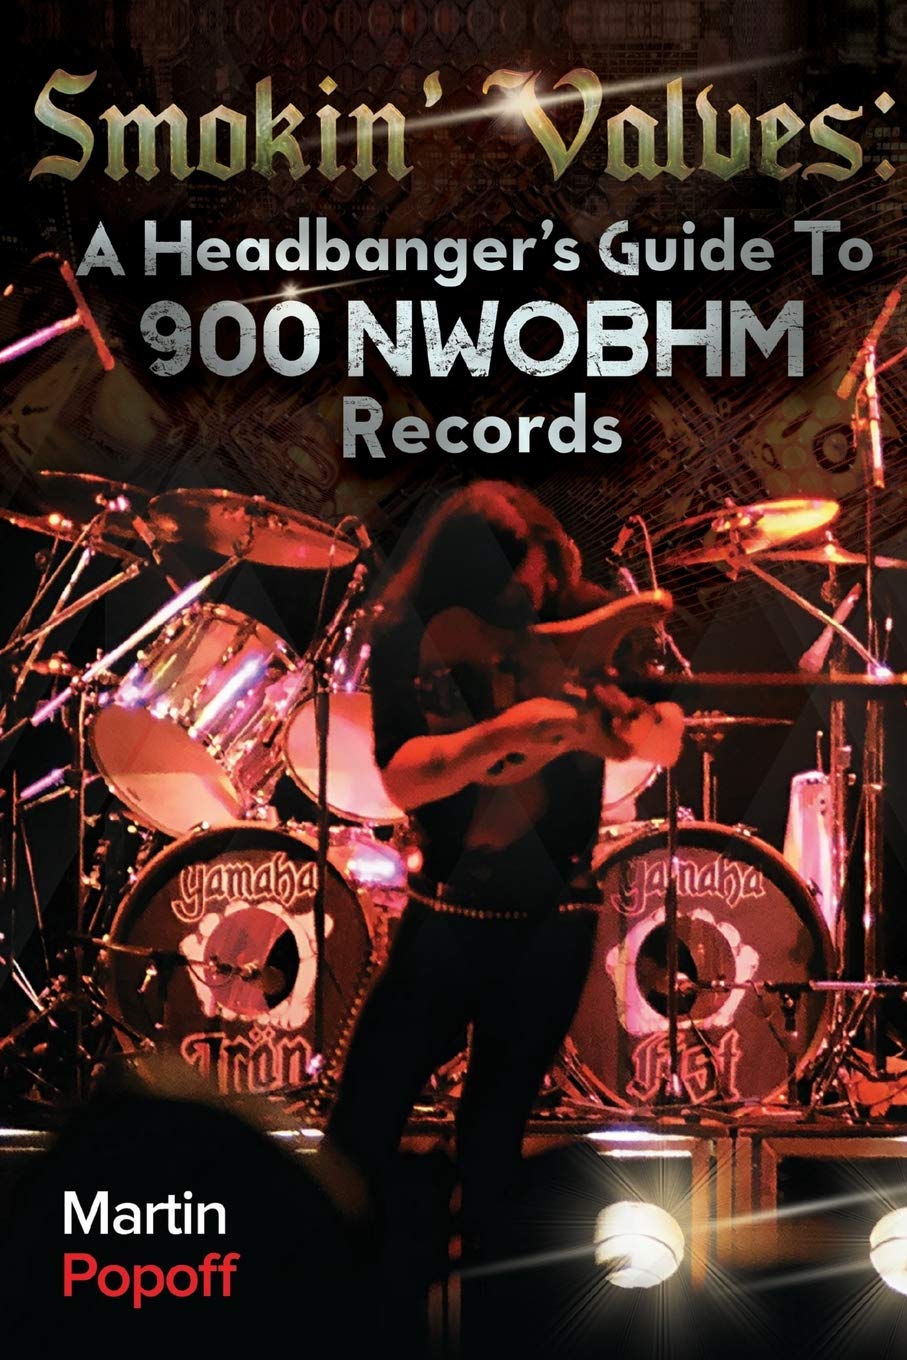 Smokin' Valves: A Headbanger's Guide To 900 NWOBHM Records by Martin Popoff - Book